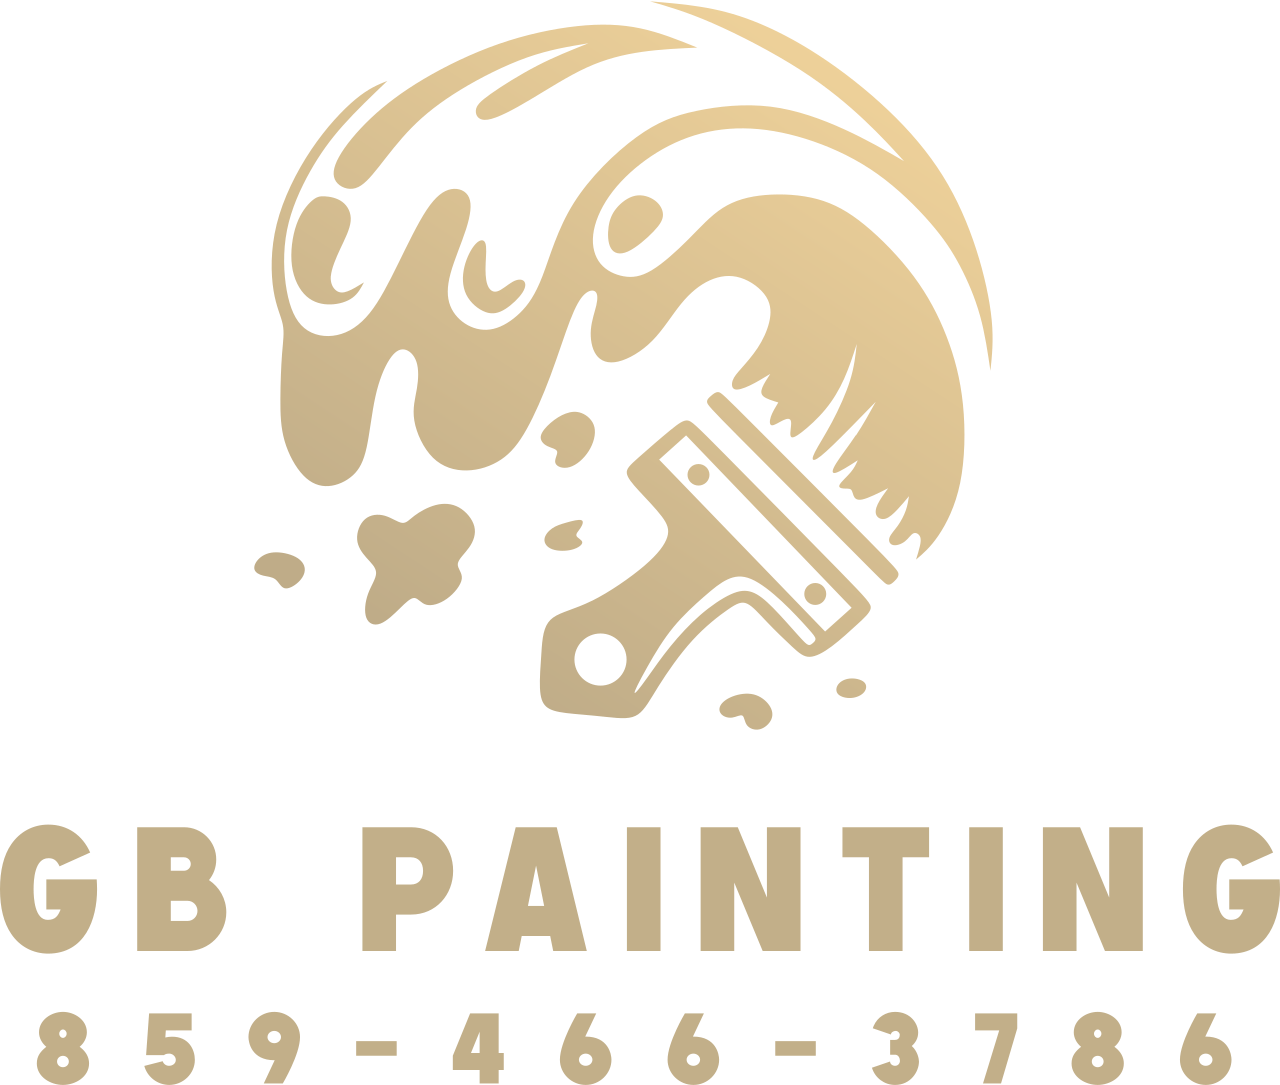 GB Painting's logo